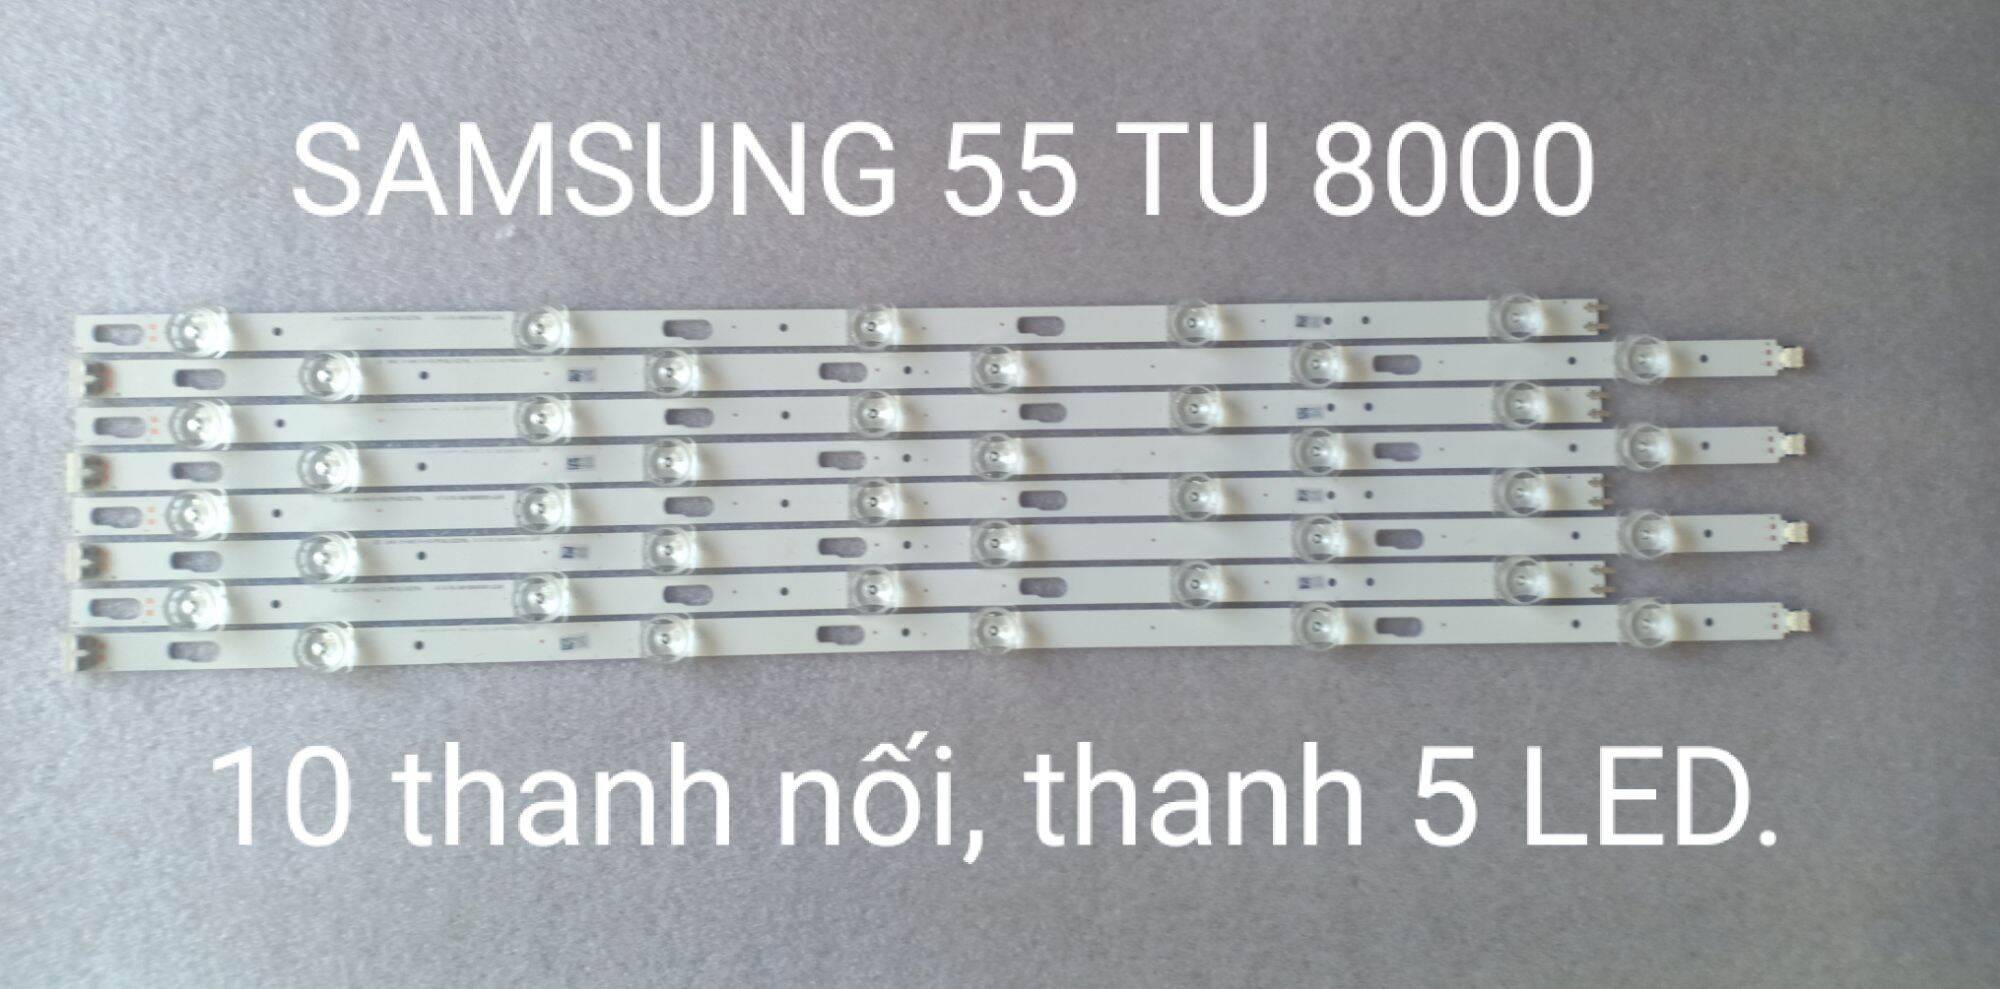 SAMSUNG 55 TU 8000  10 thanh nối , thanh 5 LED